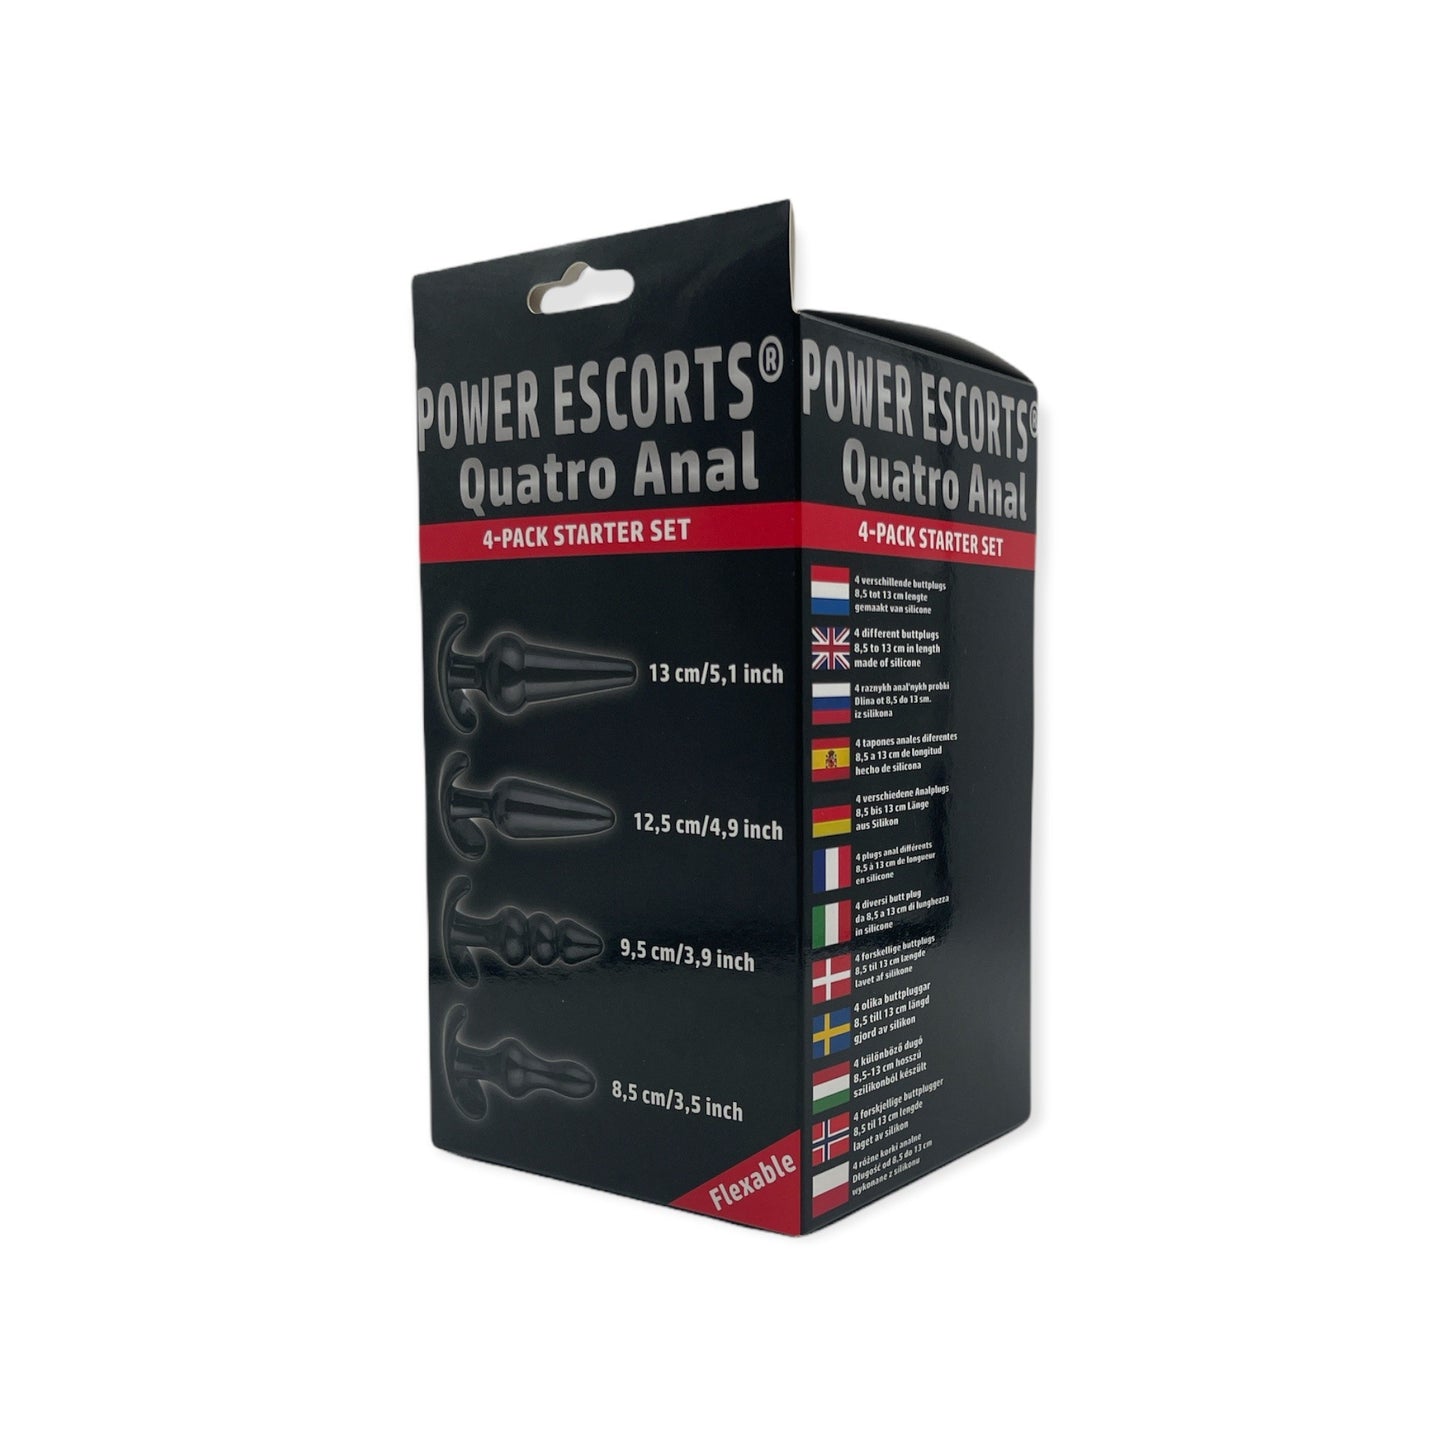 Power Escorts - BR274 - Quatro Anal Plugs 4 Pack Starter Set - 4 different sizes - attractive Colour box